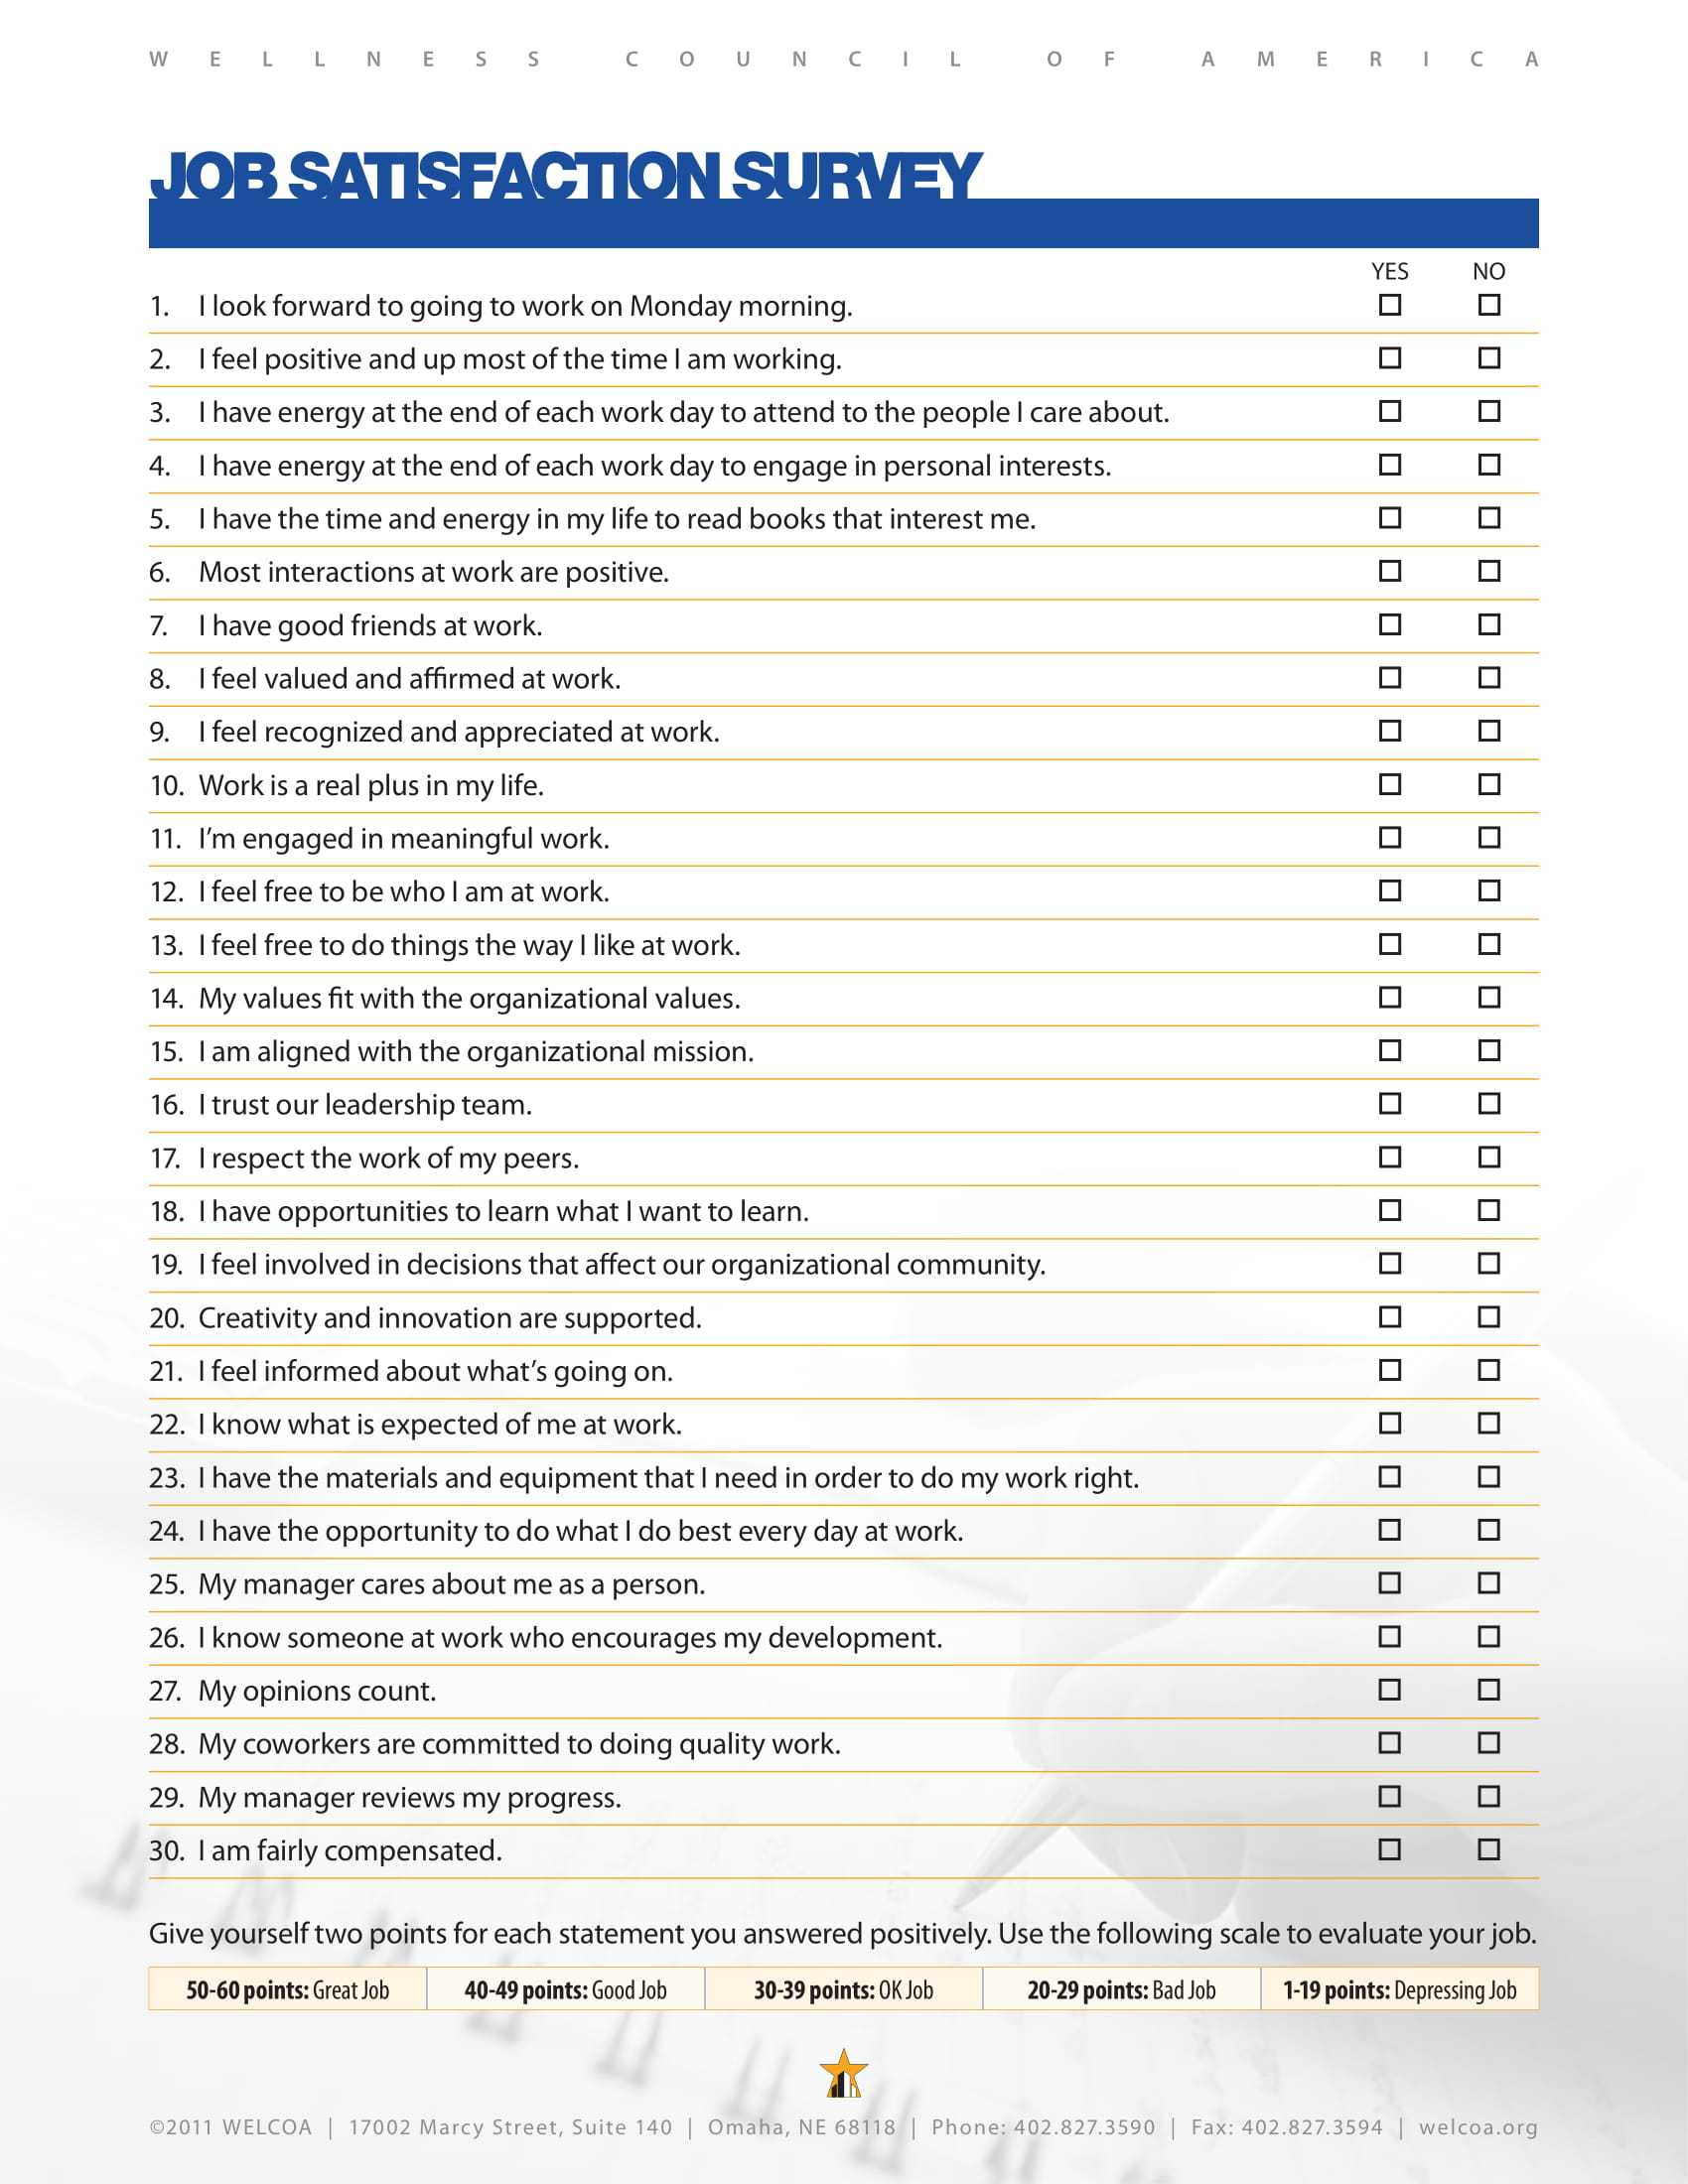 14+ Employee Satisfaction Survey Form Examples - Pdf, Doc In Employee Satisfaction Survey Template Word